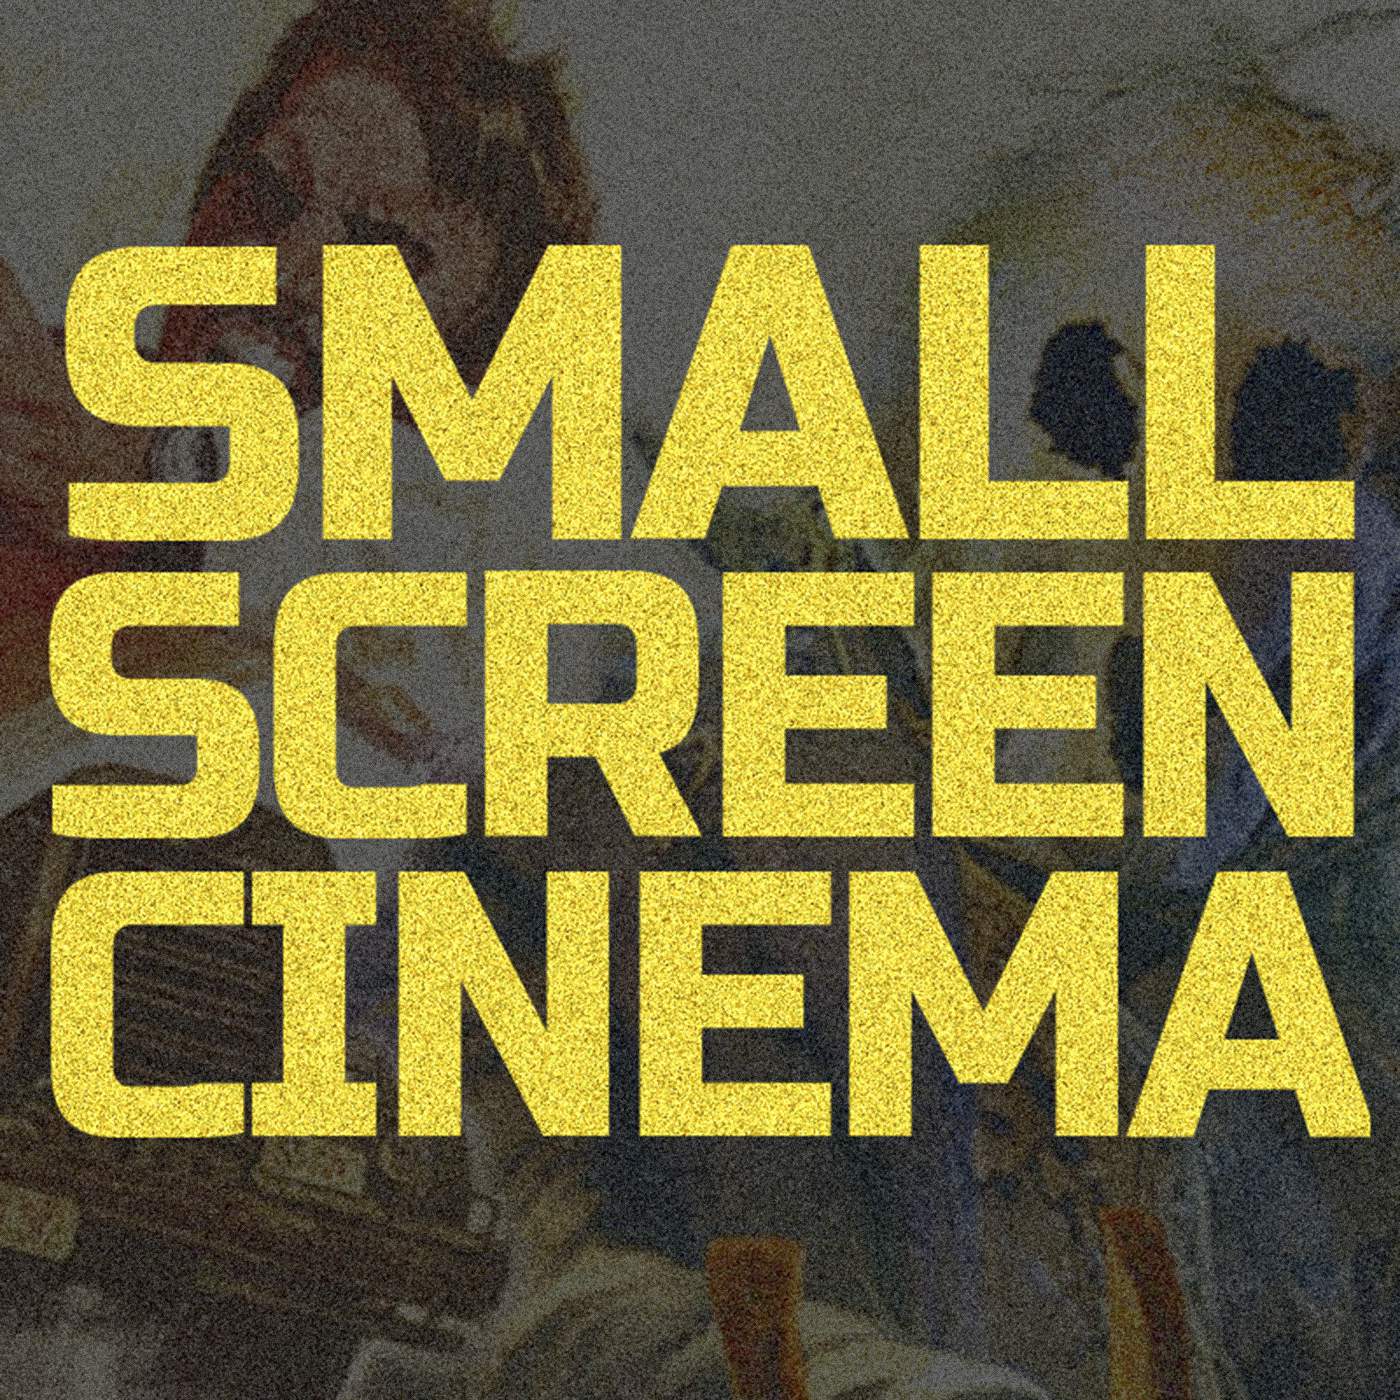 Small Screen Cinema